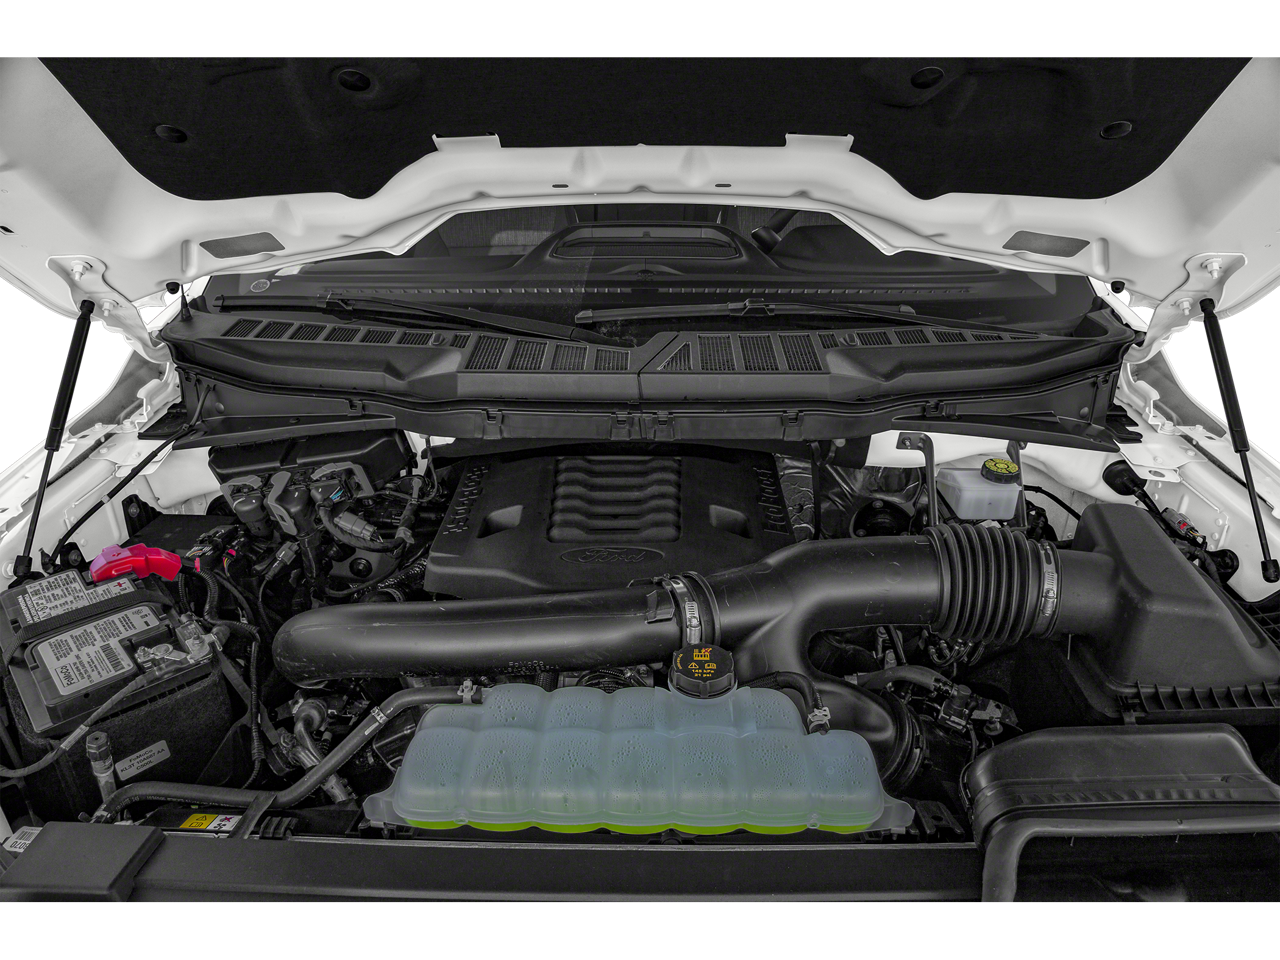 2021 Ford F-150 XLT Odometer is 20850 miles below market average!